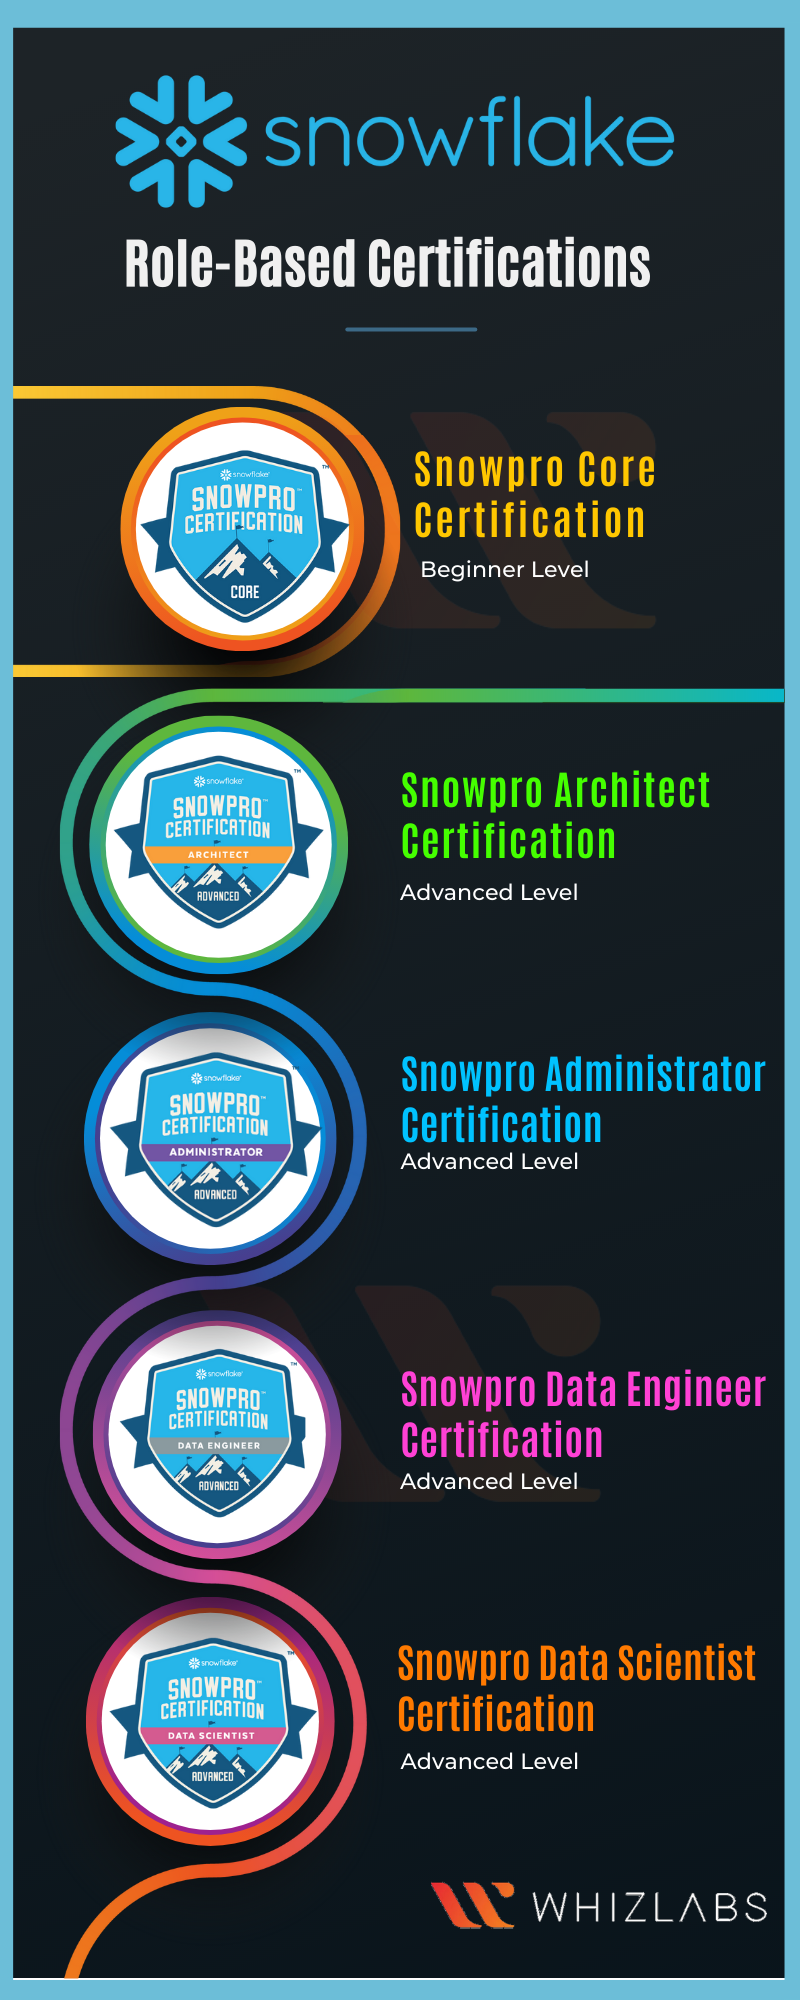 snowflake certification list